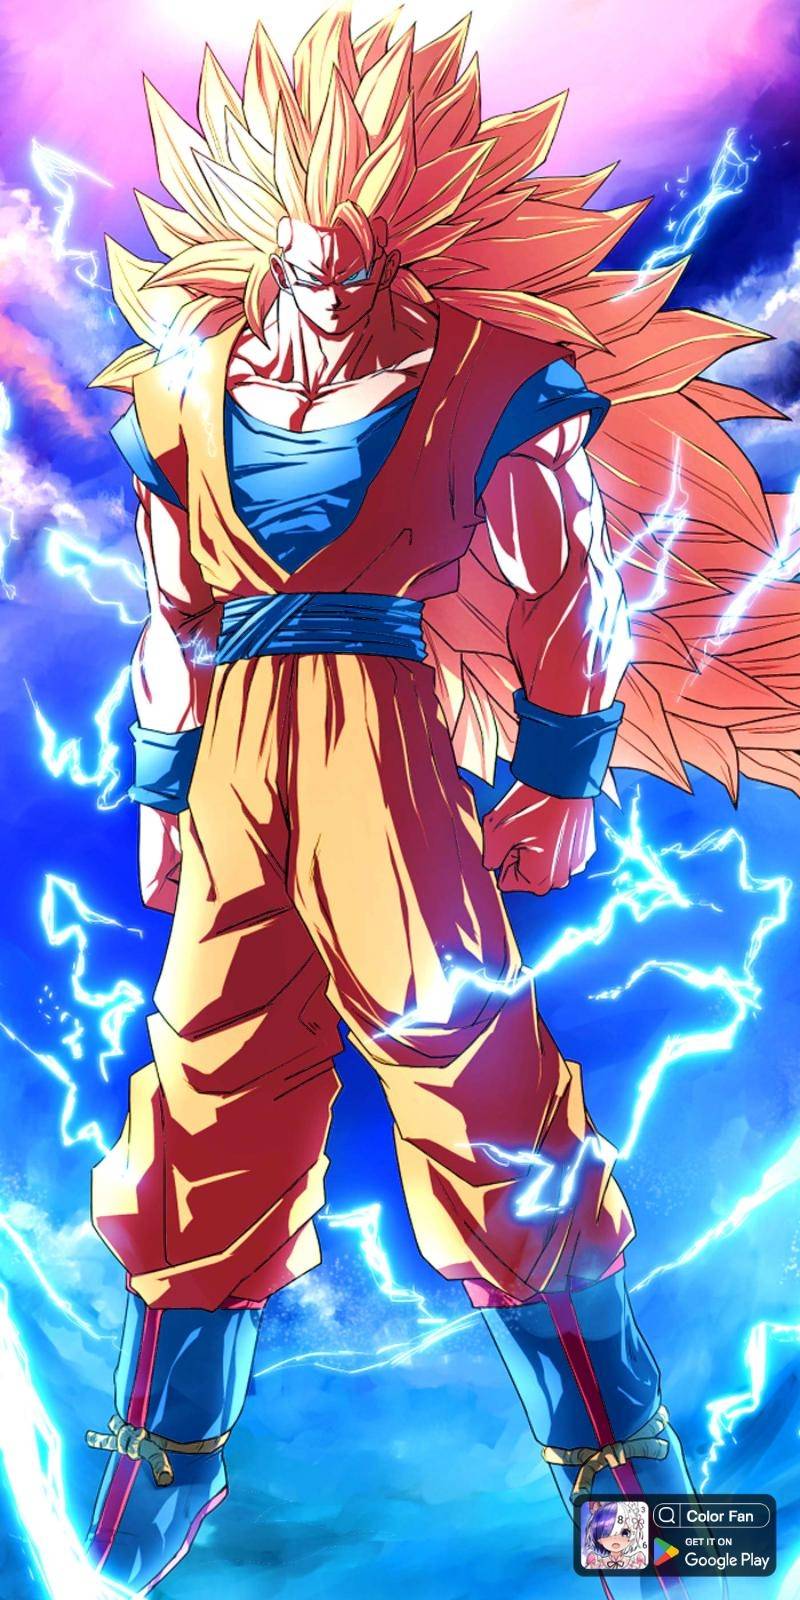 Goku Super Saiyan 3 SSJ3 by ameyfire on DeviantArt